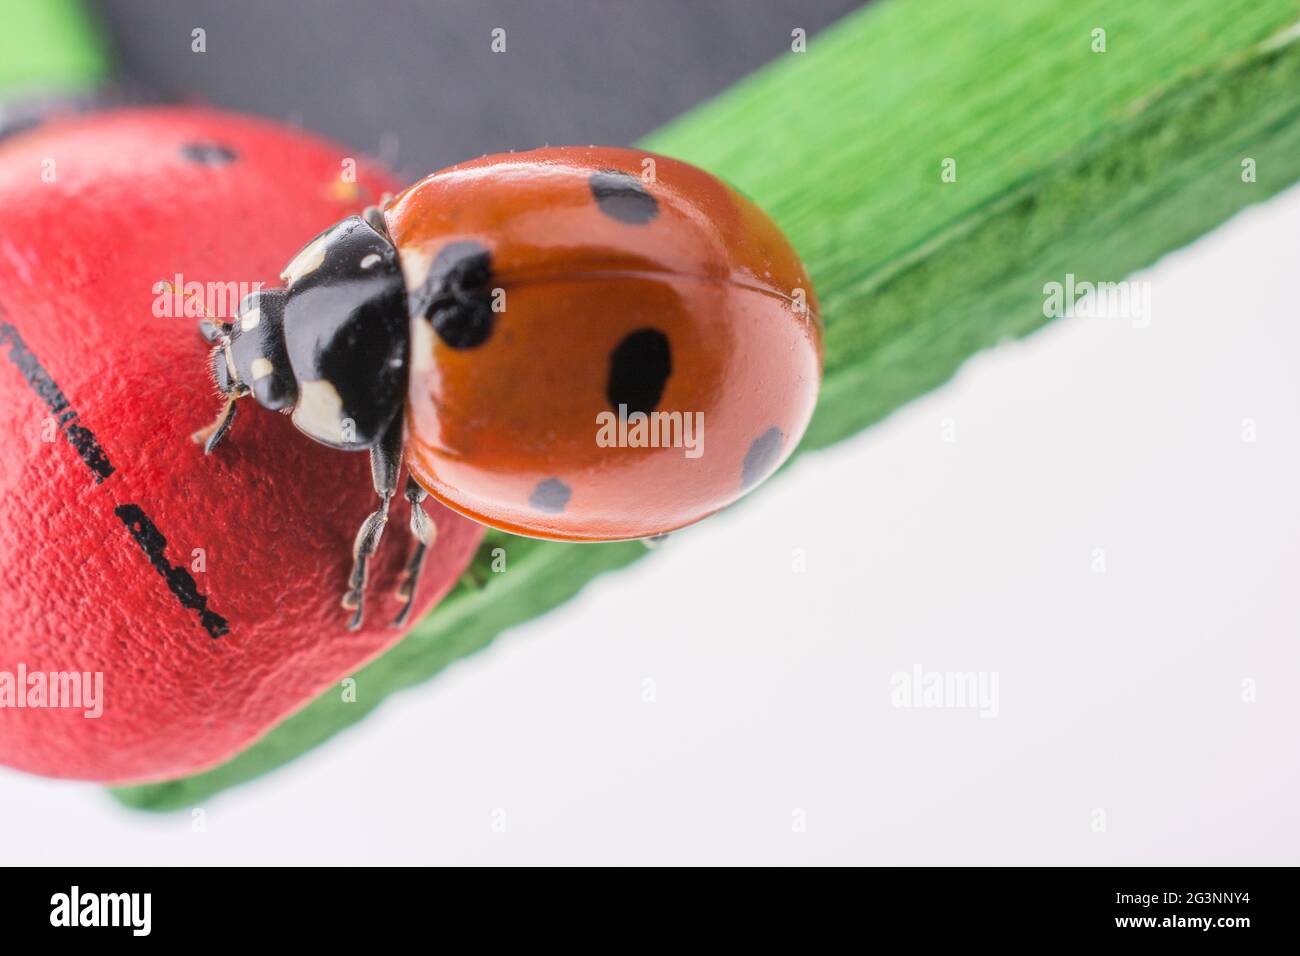 Beautiful red ladybug walking around objects Stock Photo